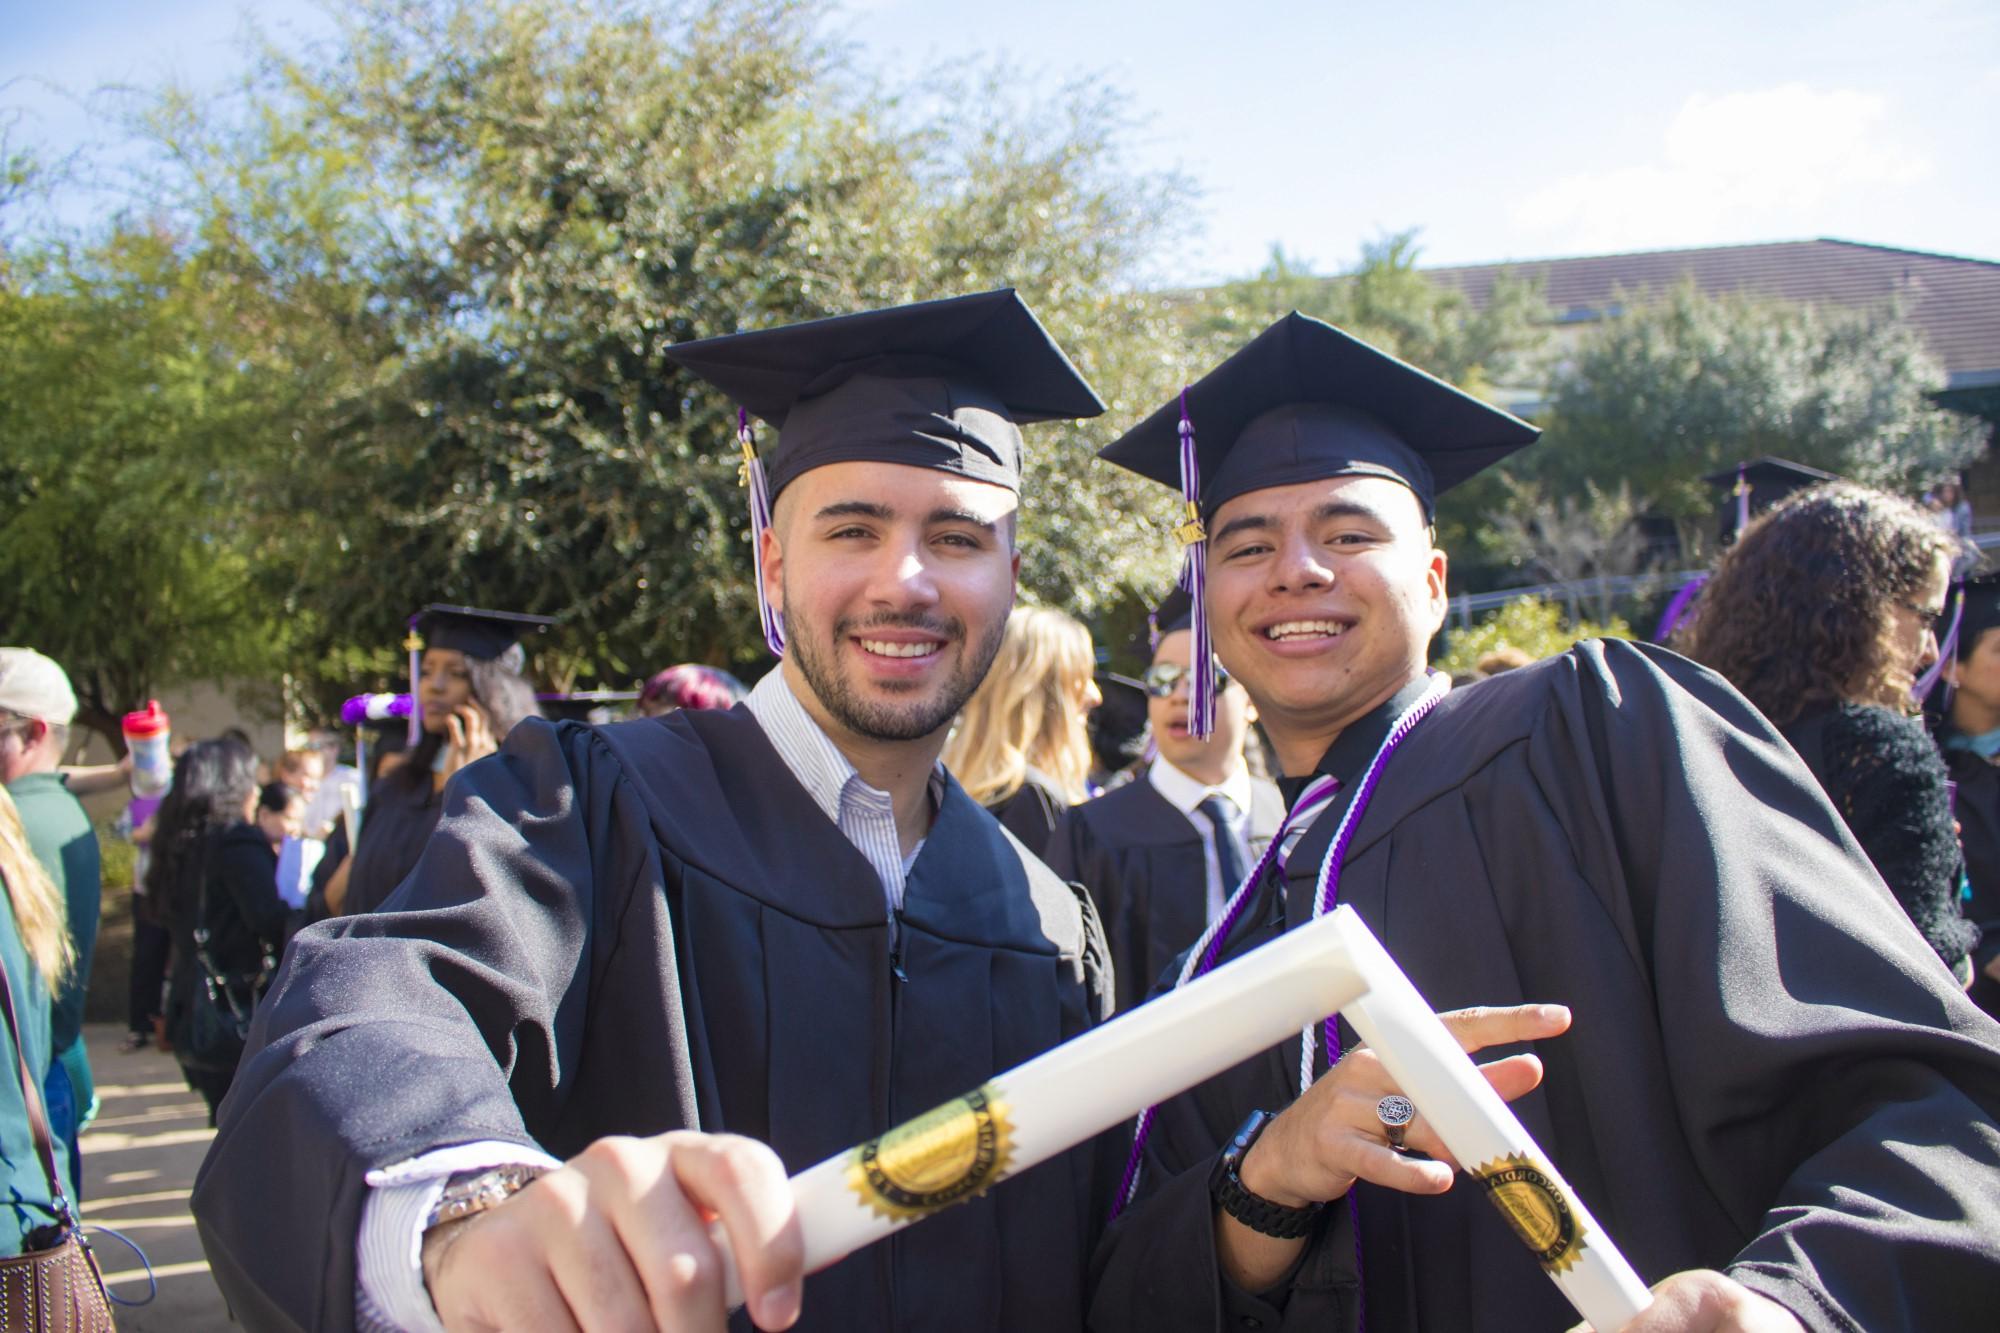 Two proud graduates